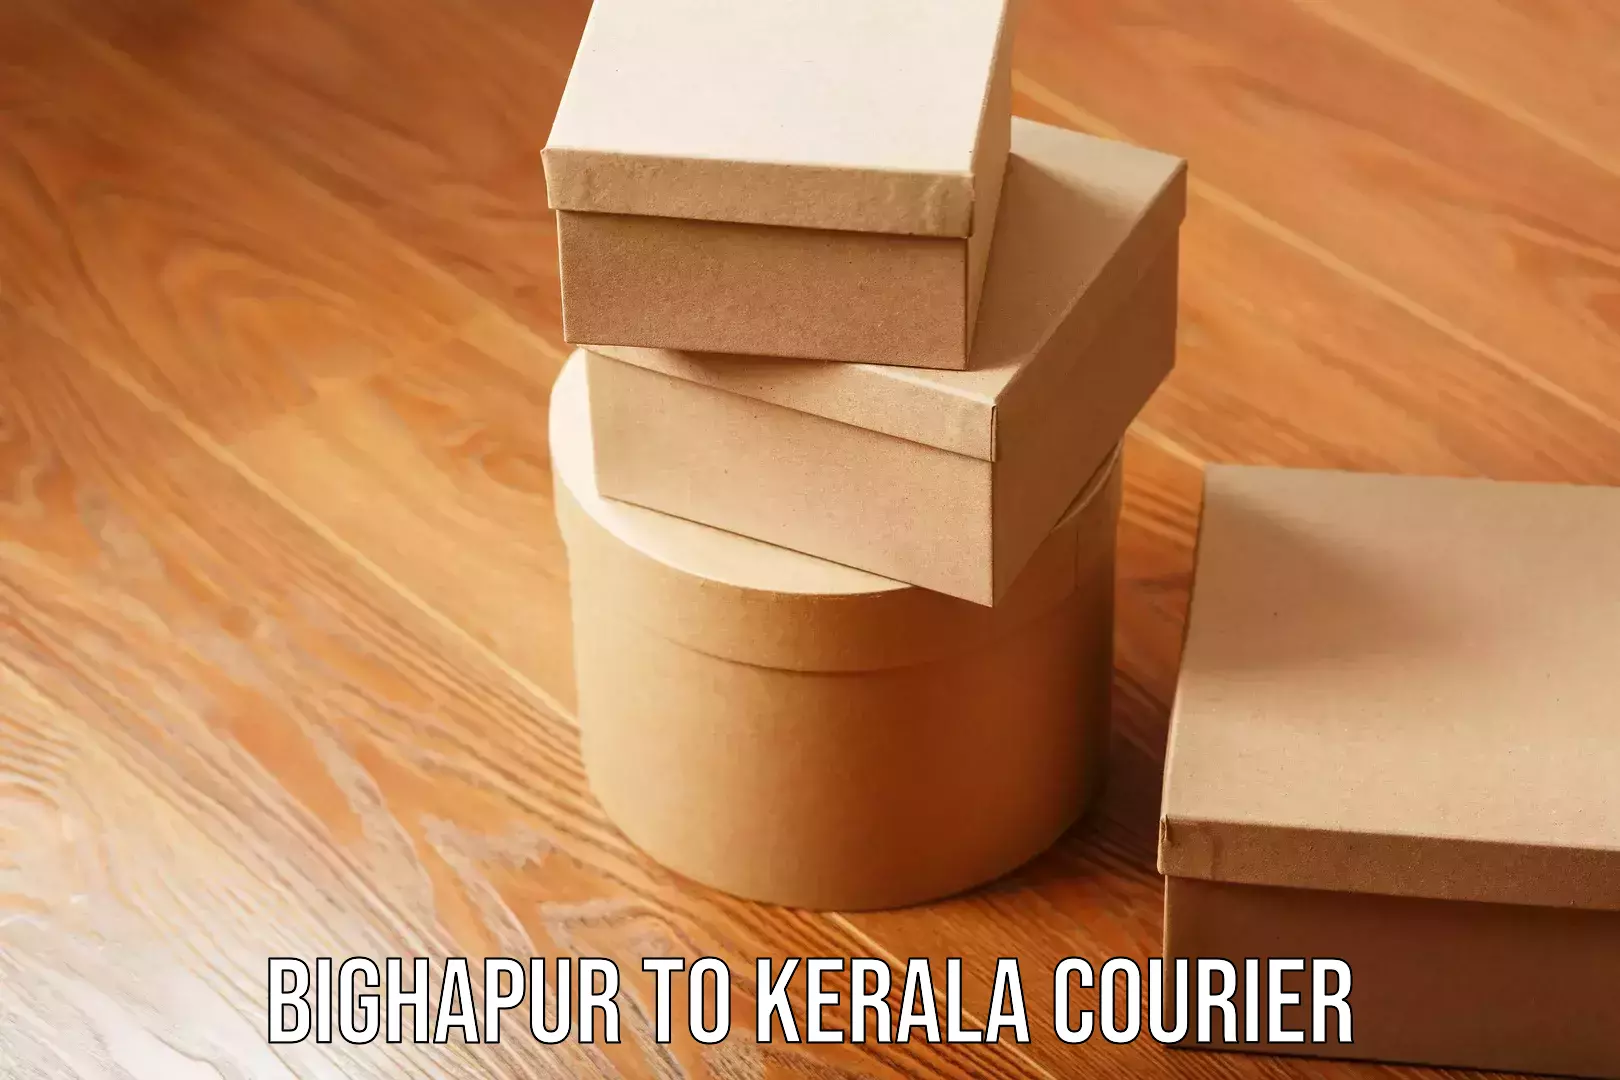 High-capacity parcel service Bighapur to Kerala